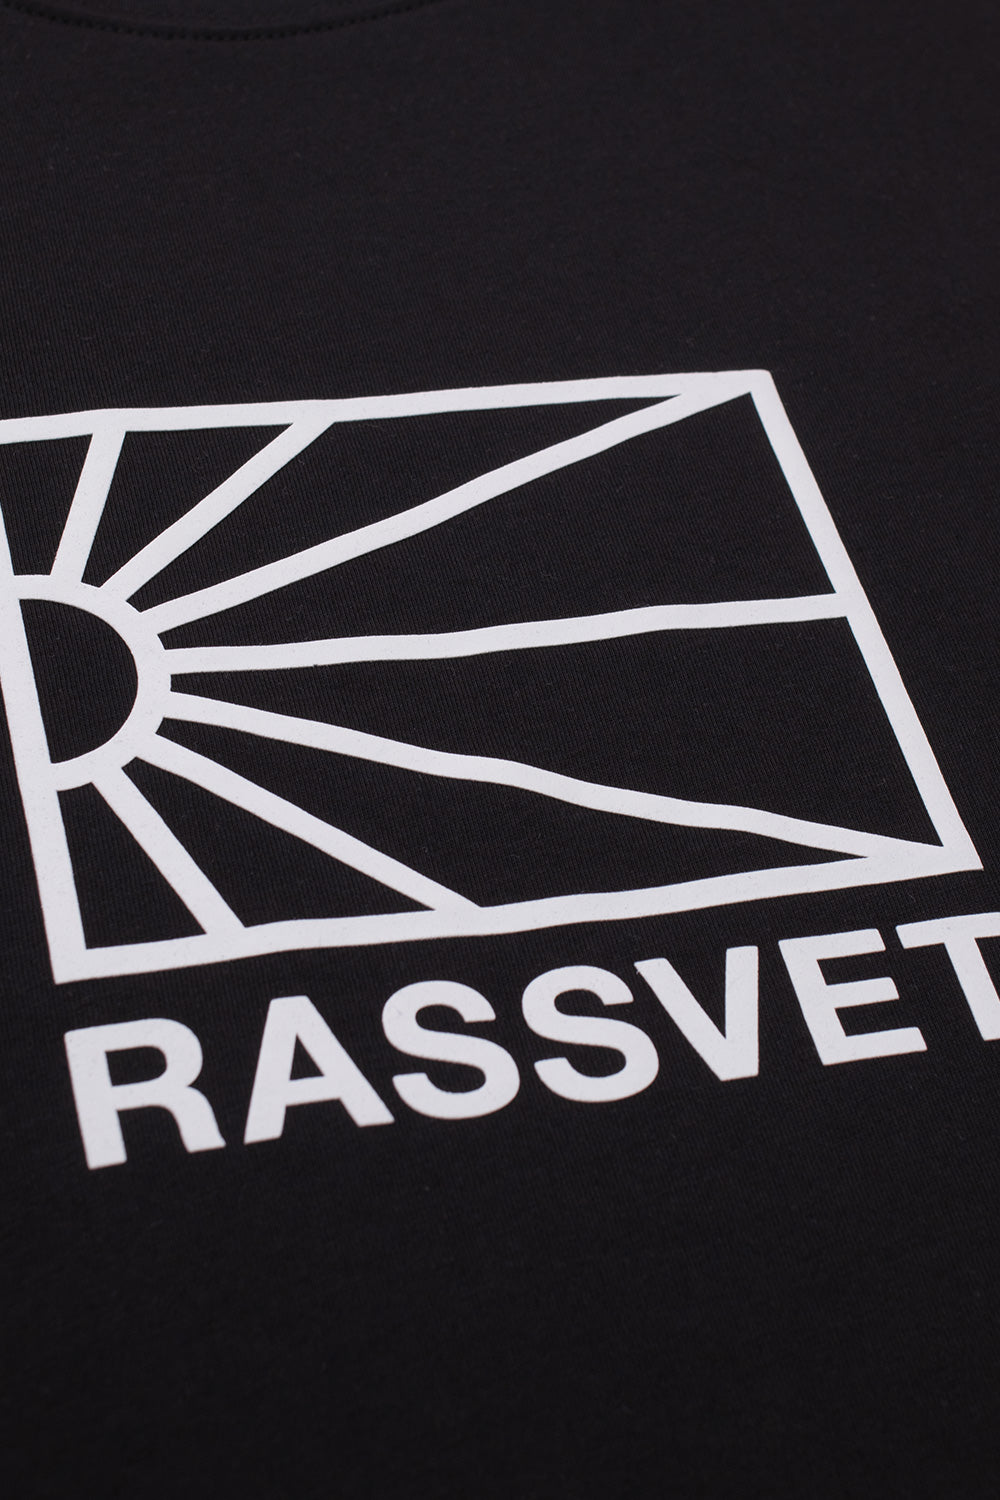 Rassvet (PACCBET) Big Logo T-Shirt Black - BONKERS